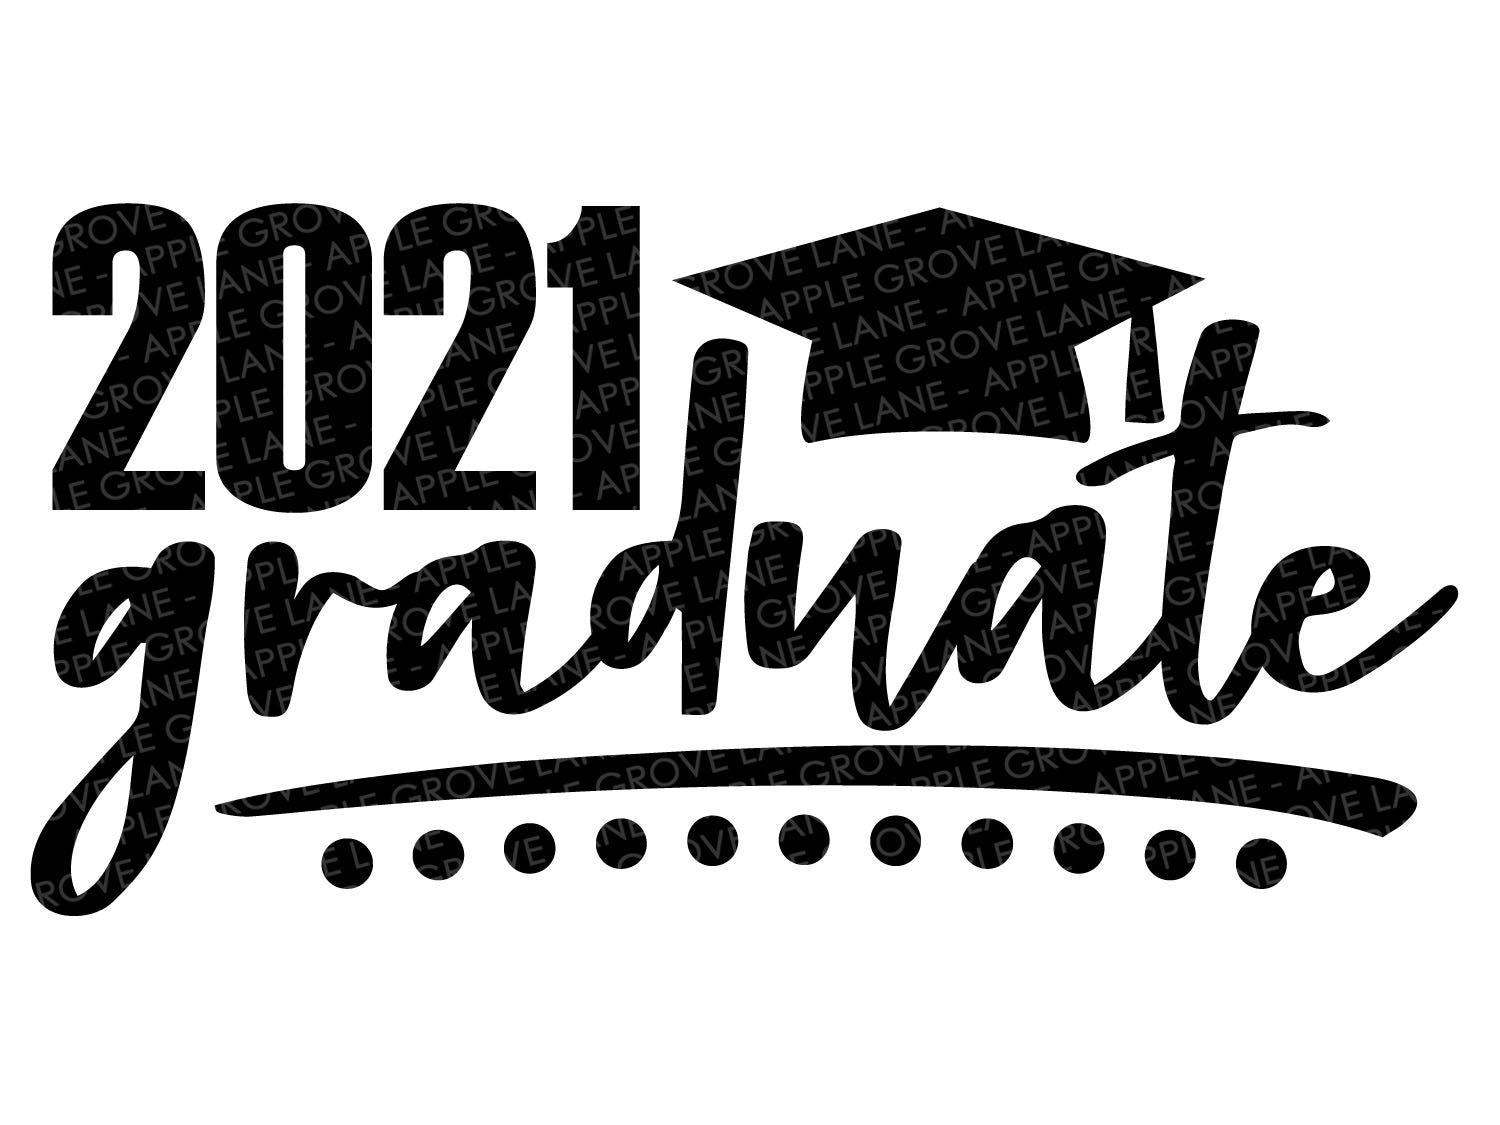 Download 2021 Graduate Svg Class Of 2021 Svg 2021 Svg 2021 Graduation Svg Apple Grove Lane